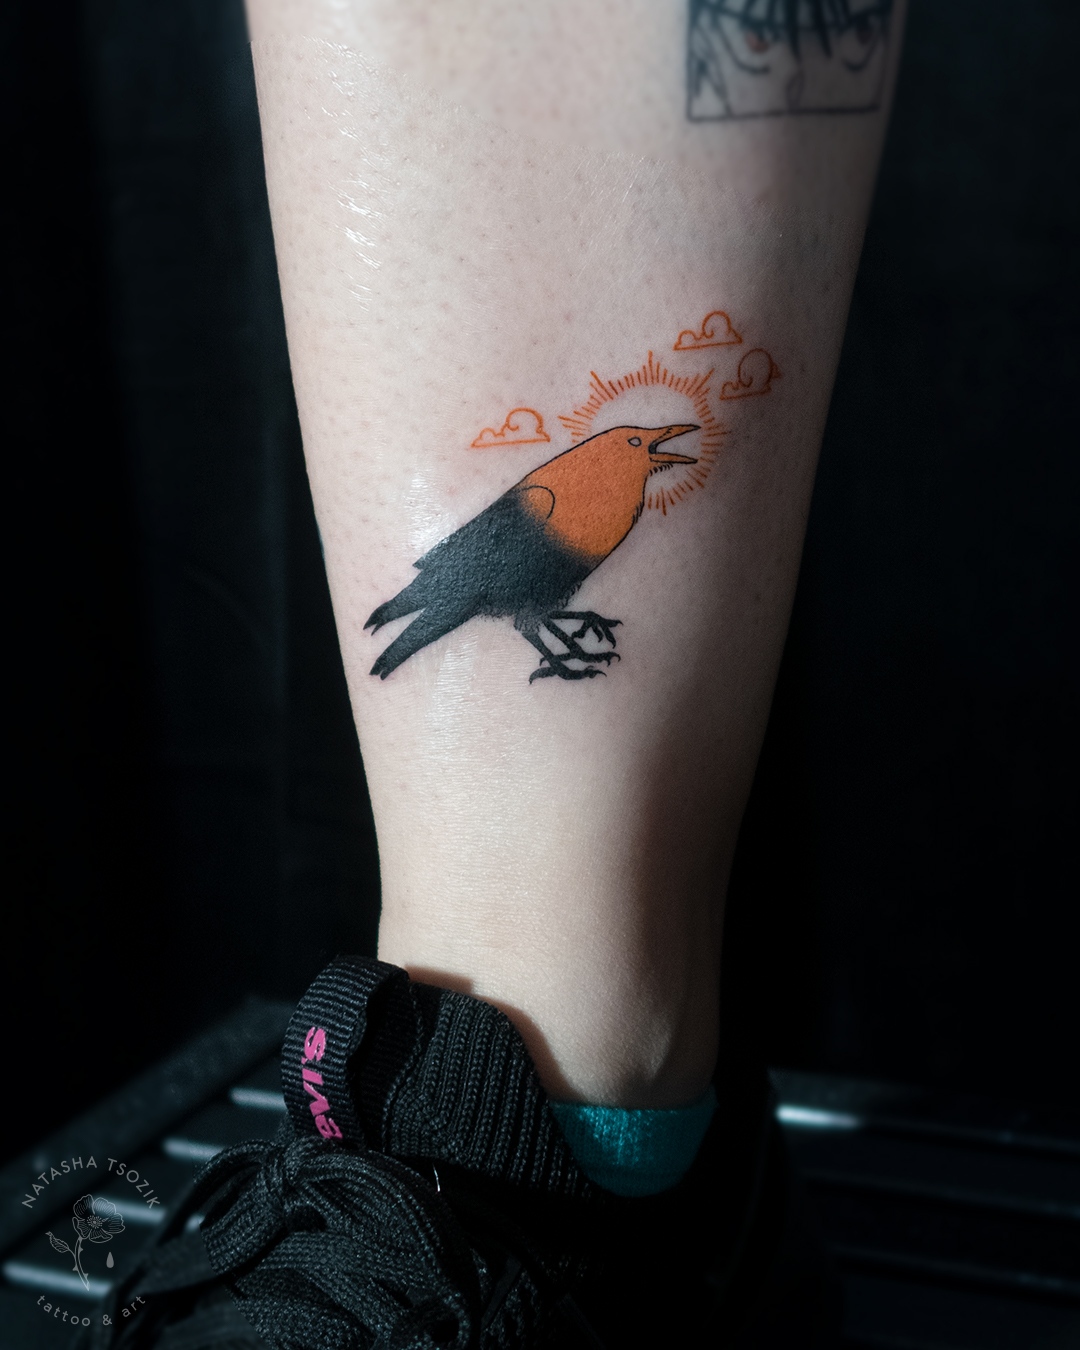 A raven tattoo on a leg